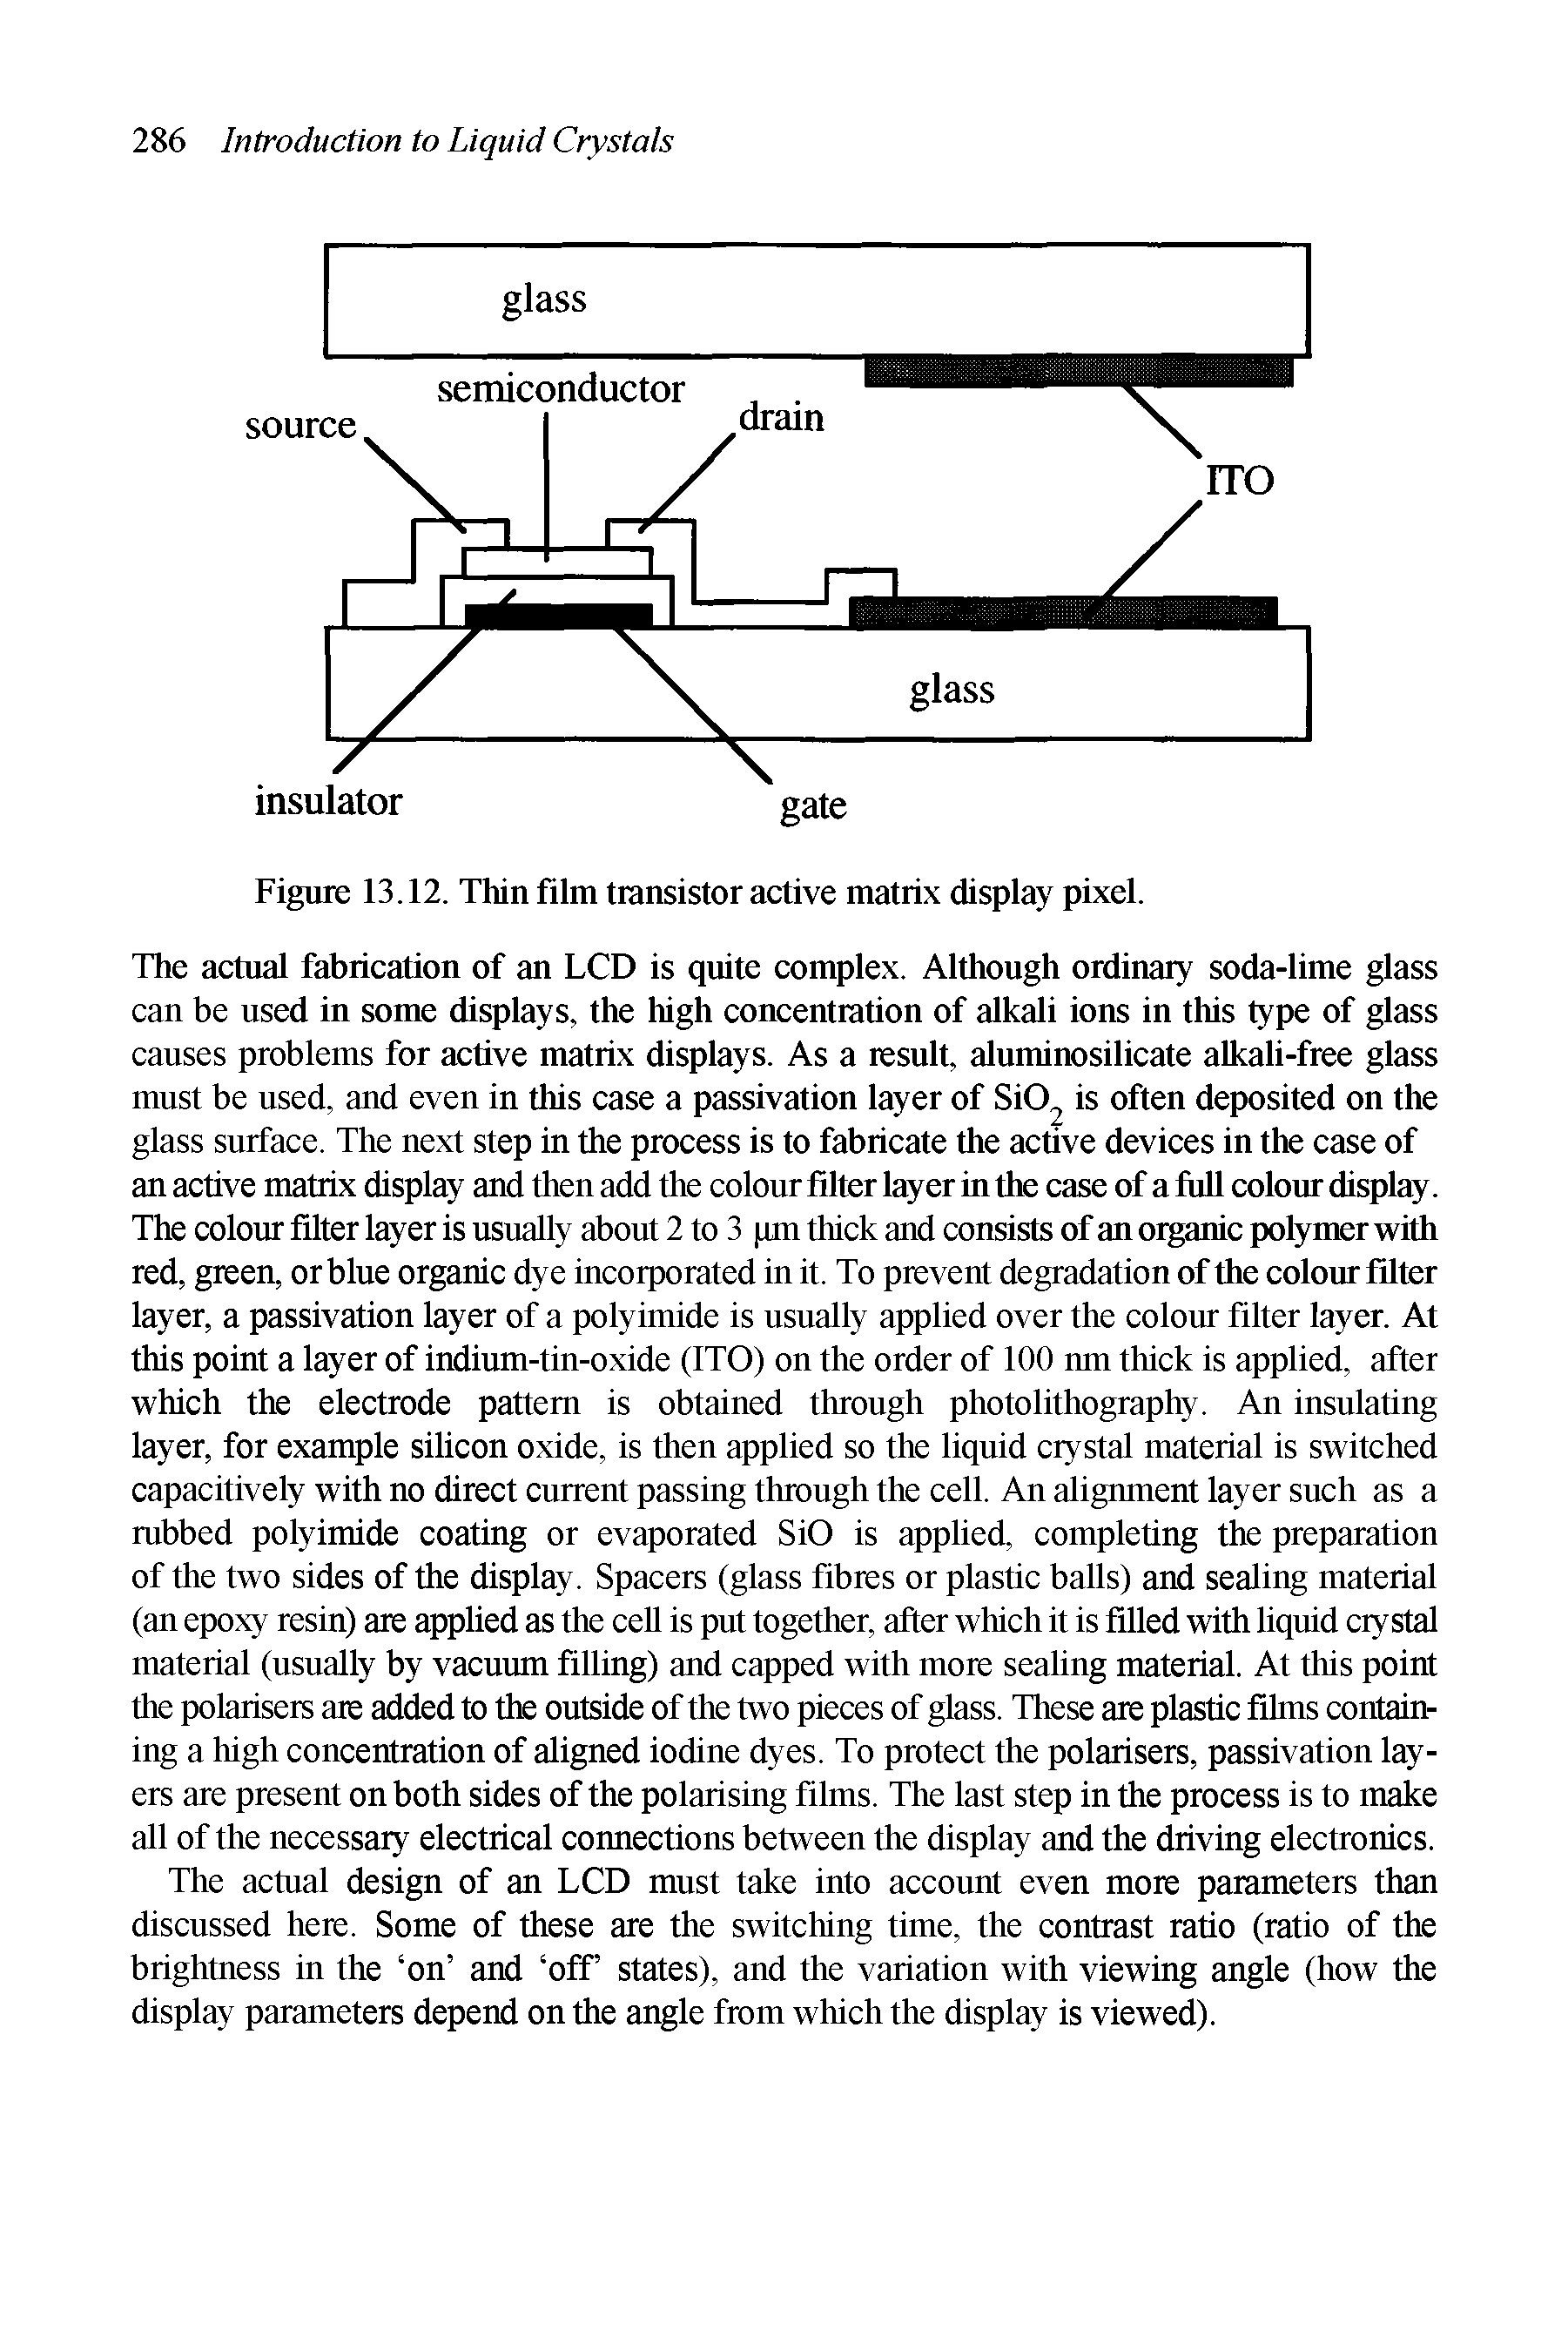 Figure 13.12. Thin film transistor active matrix display pixel.